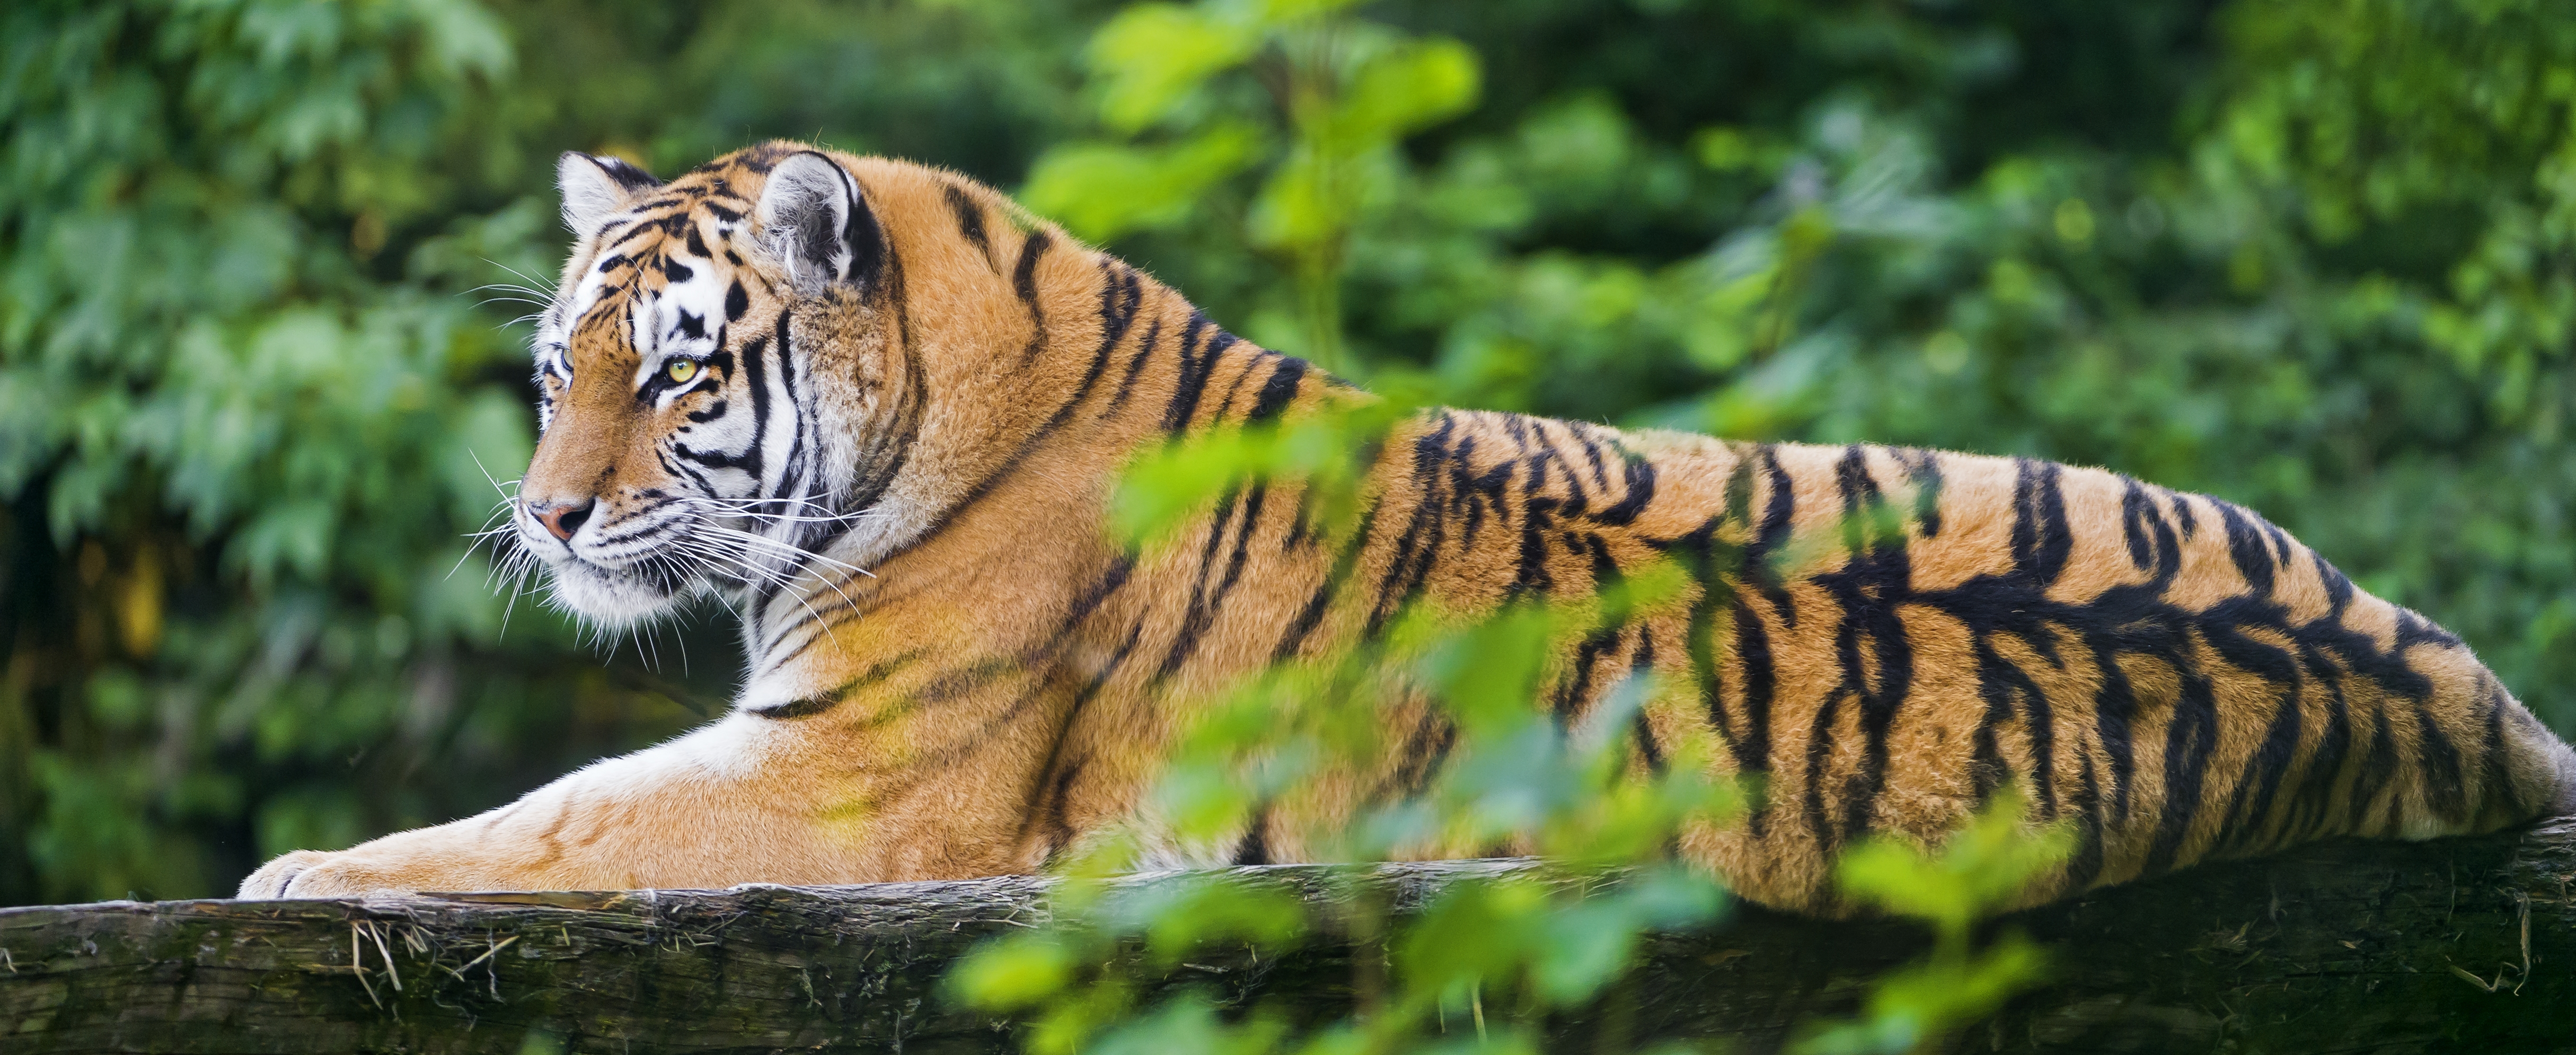 HD wallpaper, Carnivore, Young Tigress, Wood, Predator, Wild Cat, Siberian Tiger, Amur Tiger, 5K, Zoo